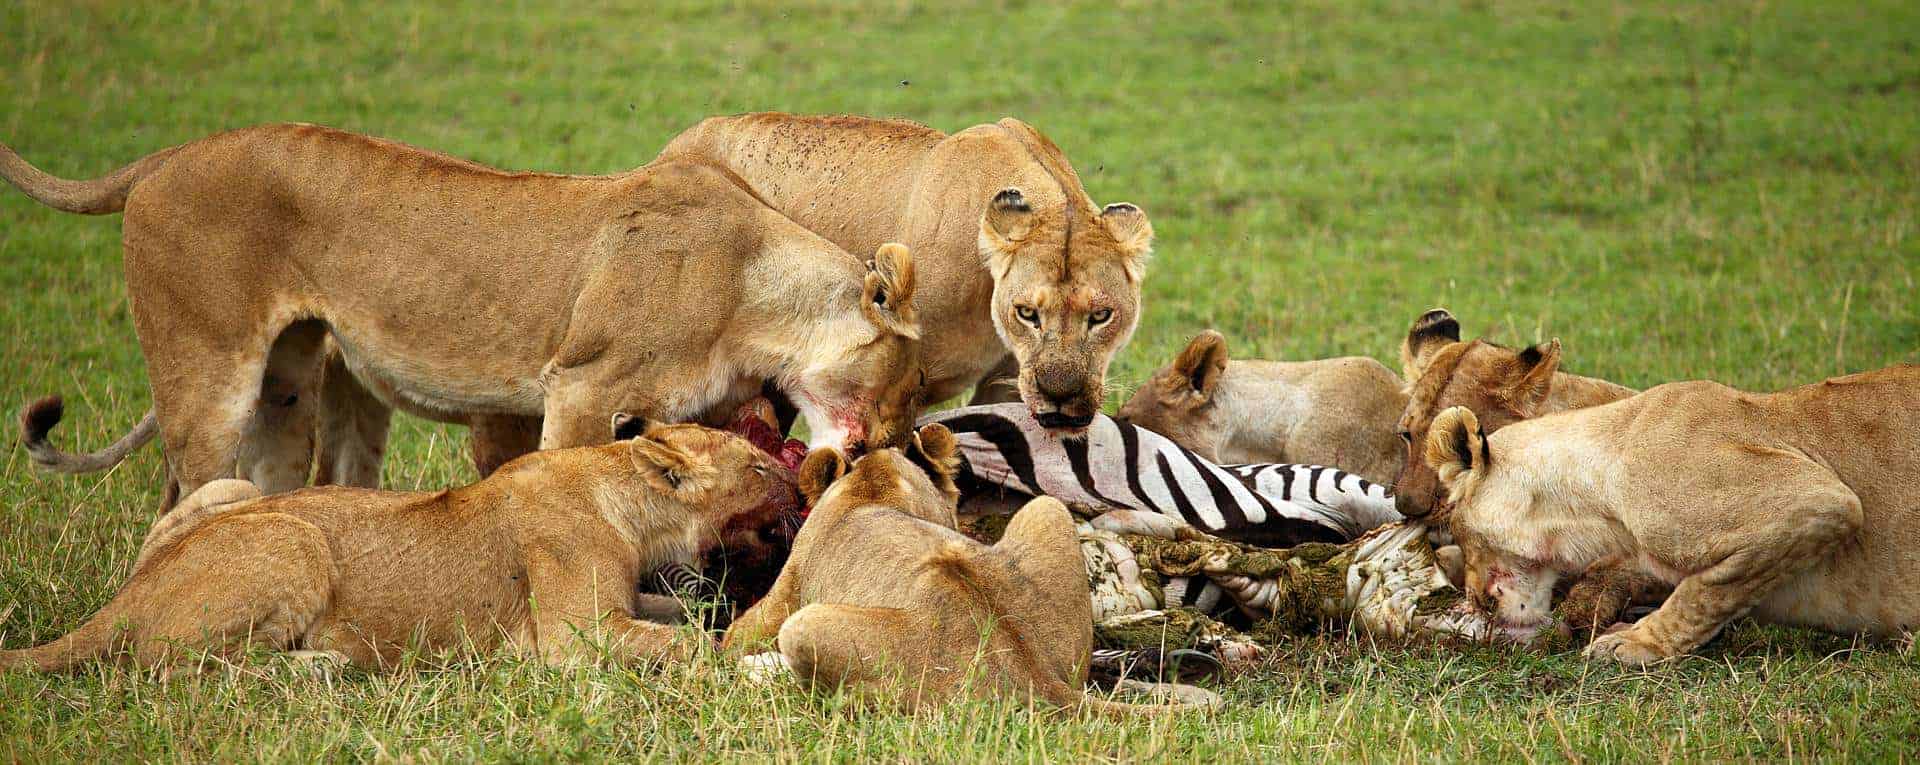 serengeti Lion pride and Zebra pray